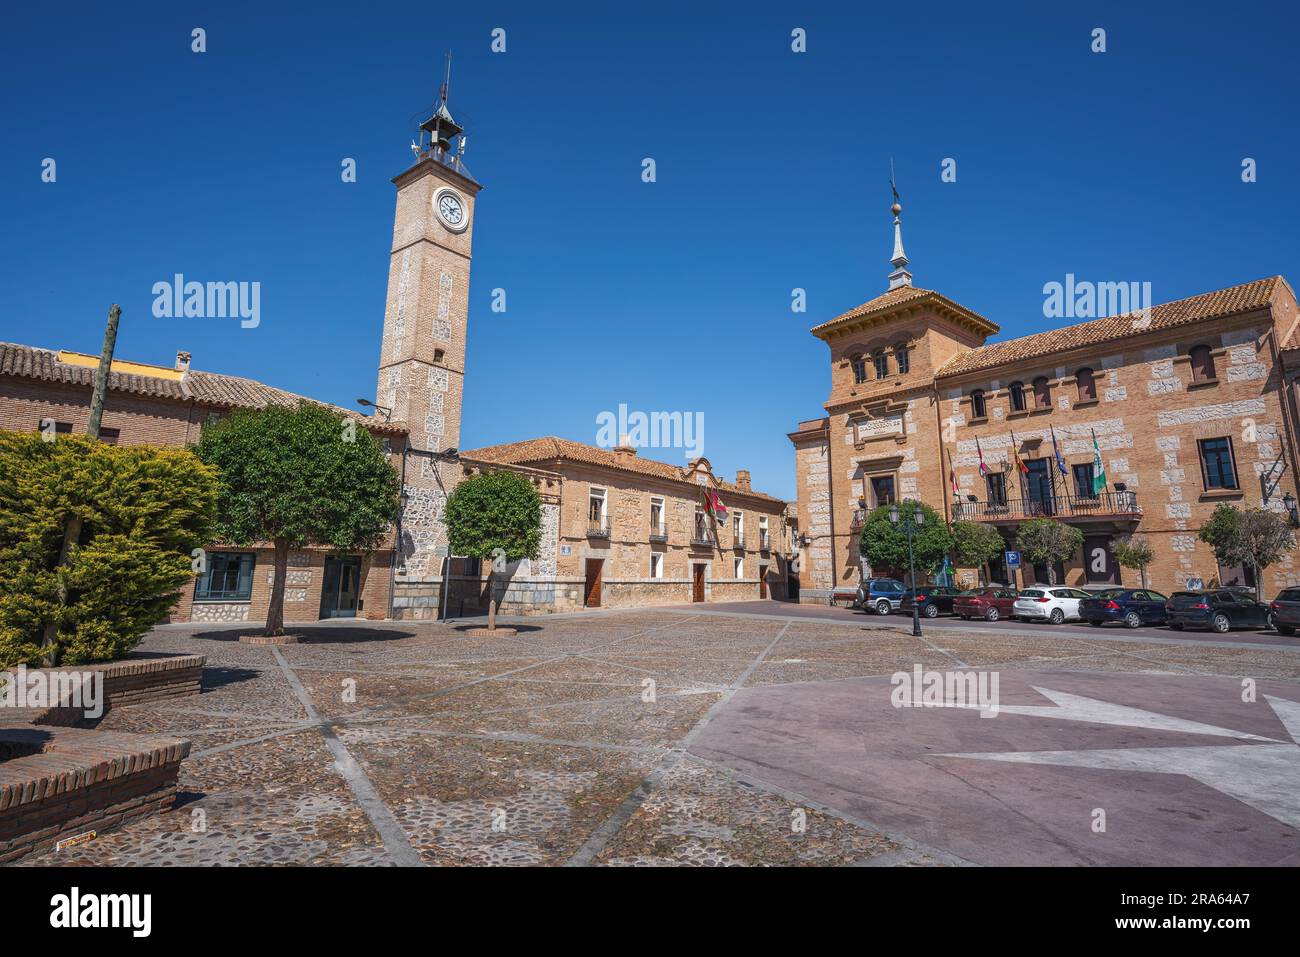 Place Plaza de Espana avec Tour de l'horloge (Torre del Reloj) et Hôtel de ville de Consuegra - Consuegra, Castilla-la Mancha, Espagne Banque D'Images